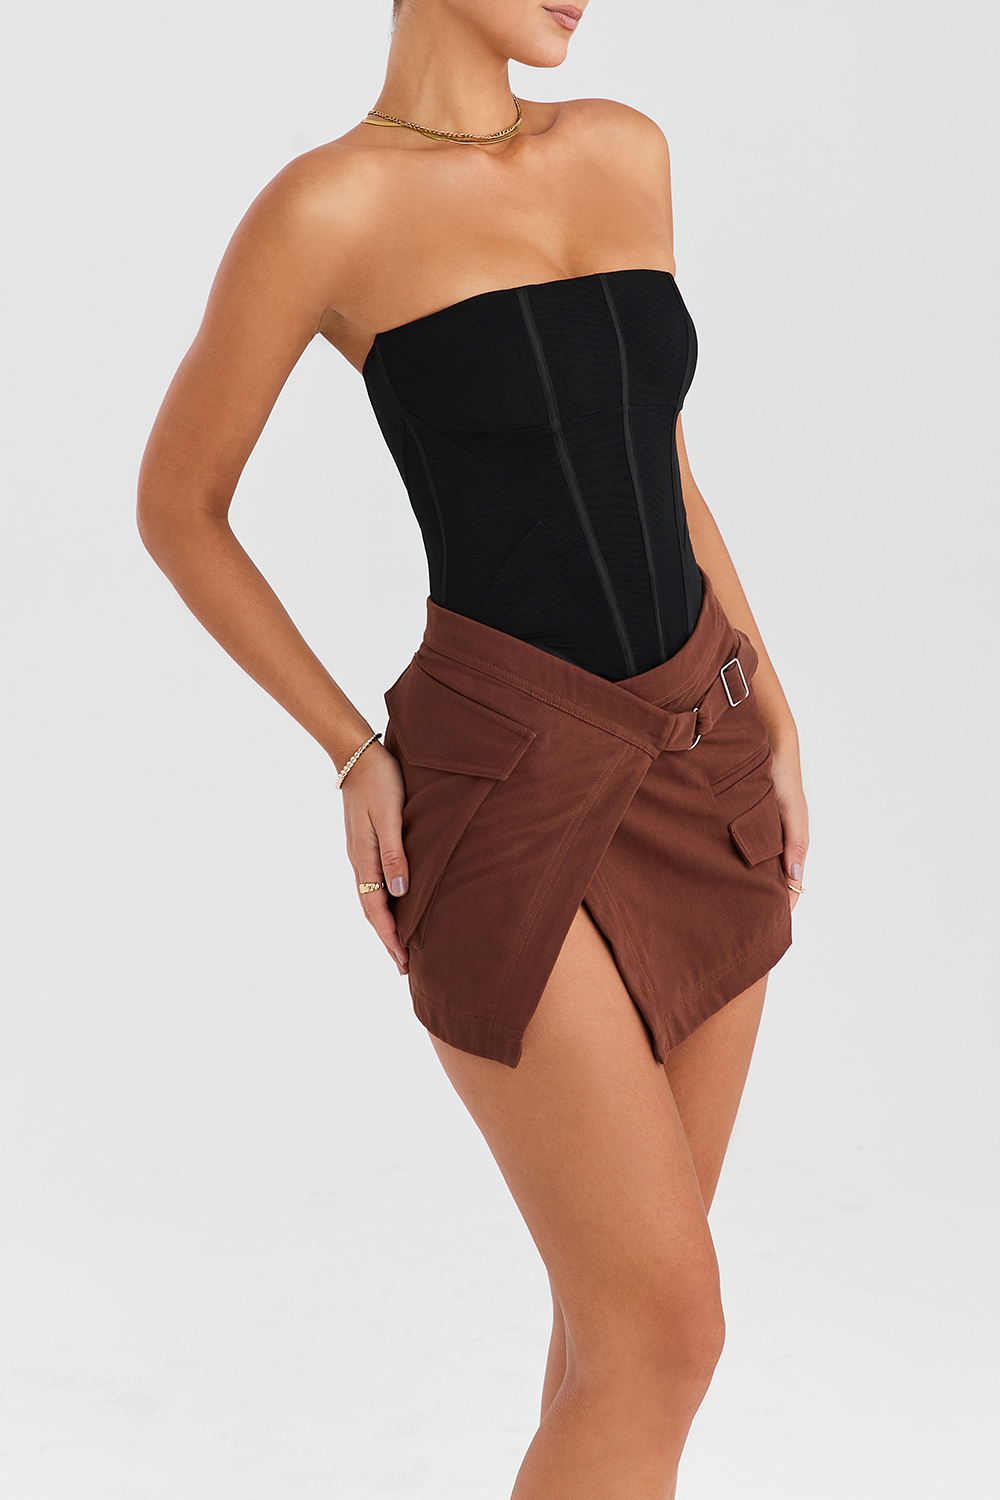 Cargo Cocoa : Rocks Clothing : Mistress Asymmetric Mini Skirt Skirts